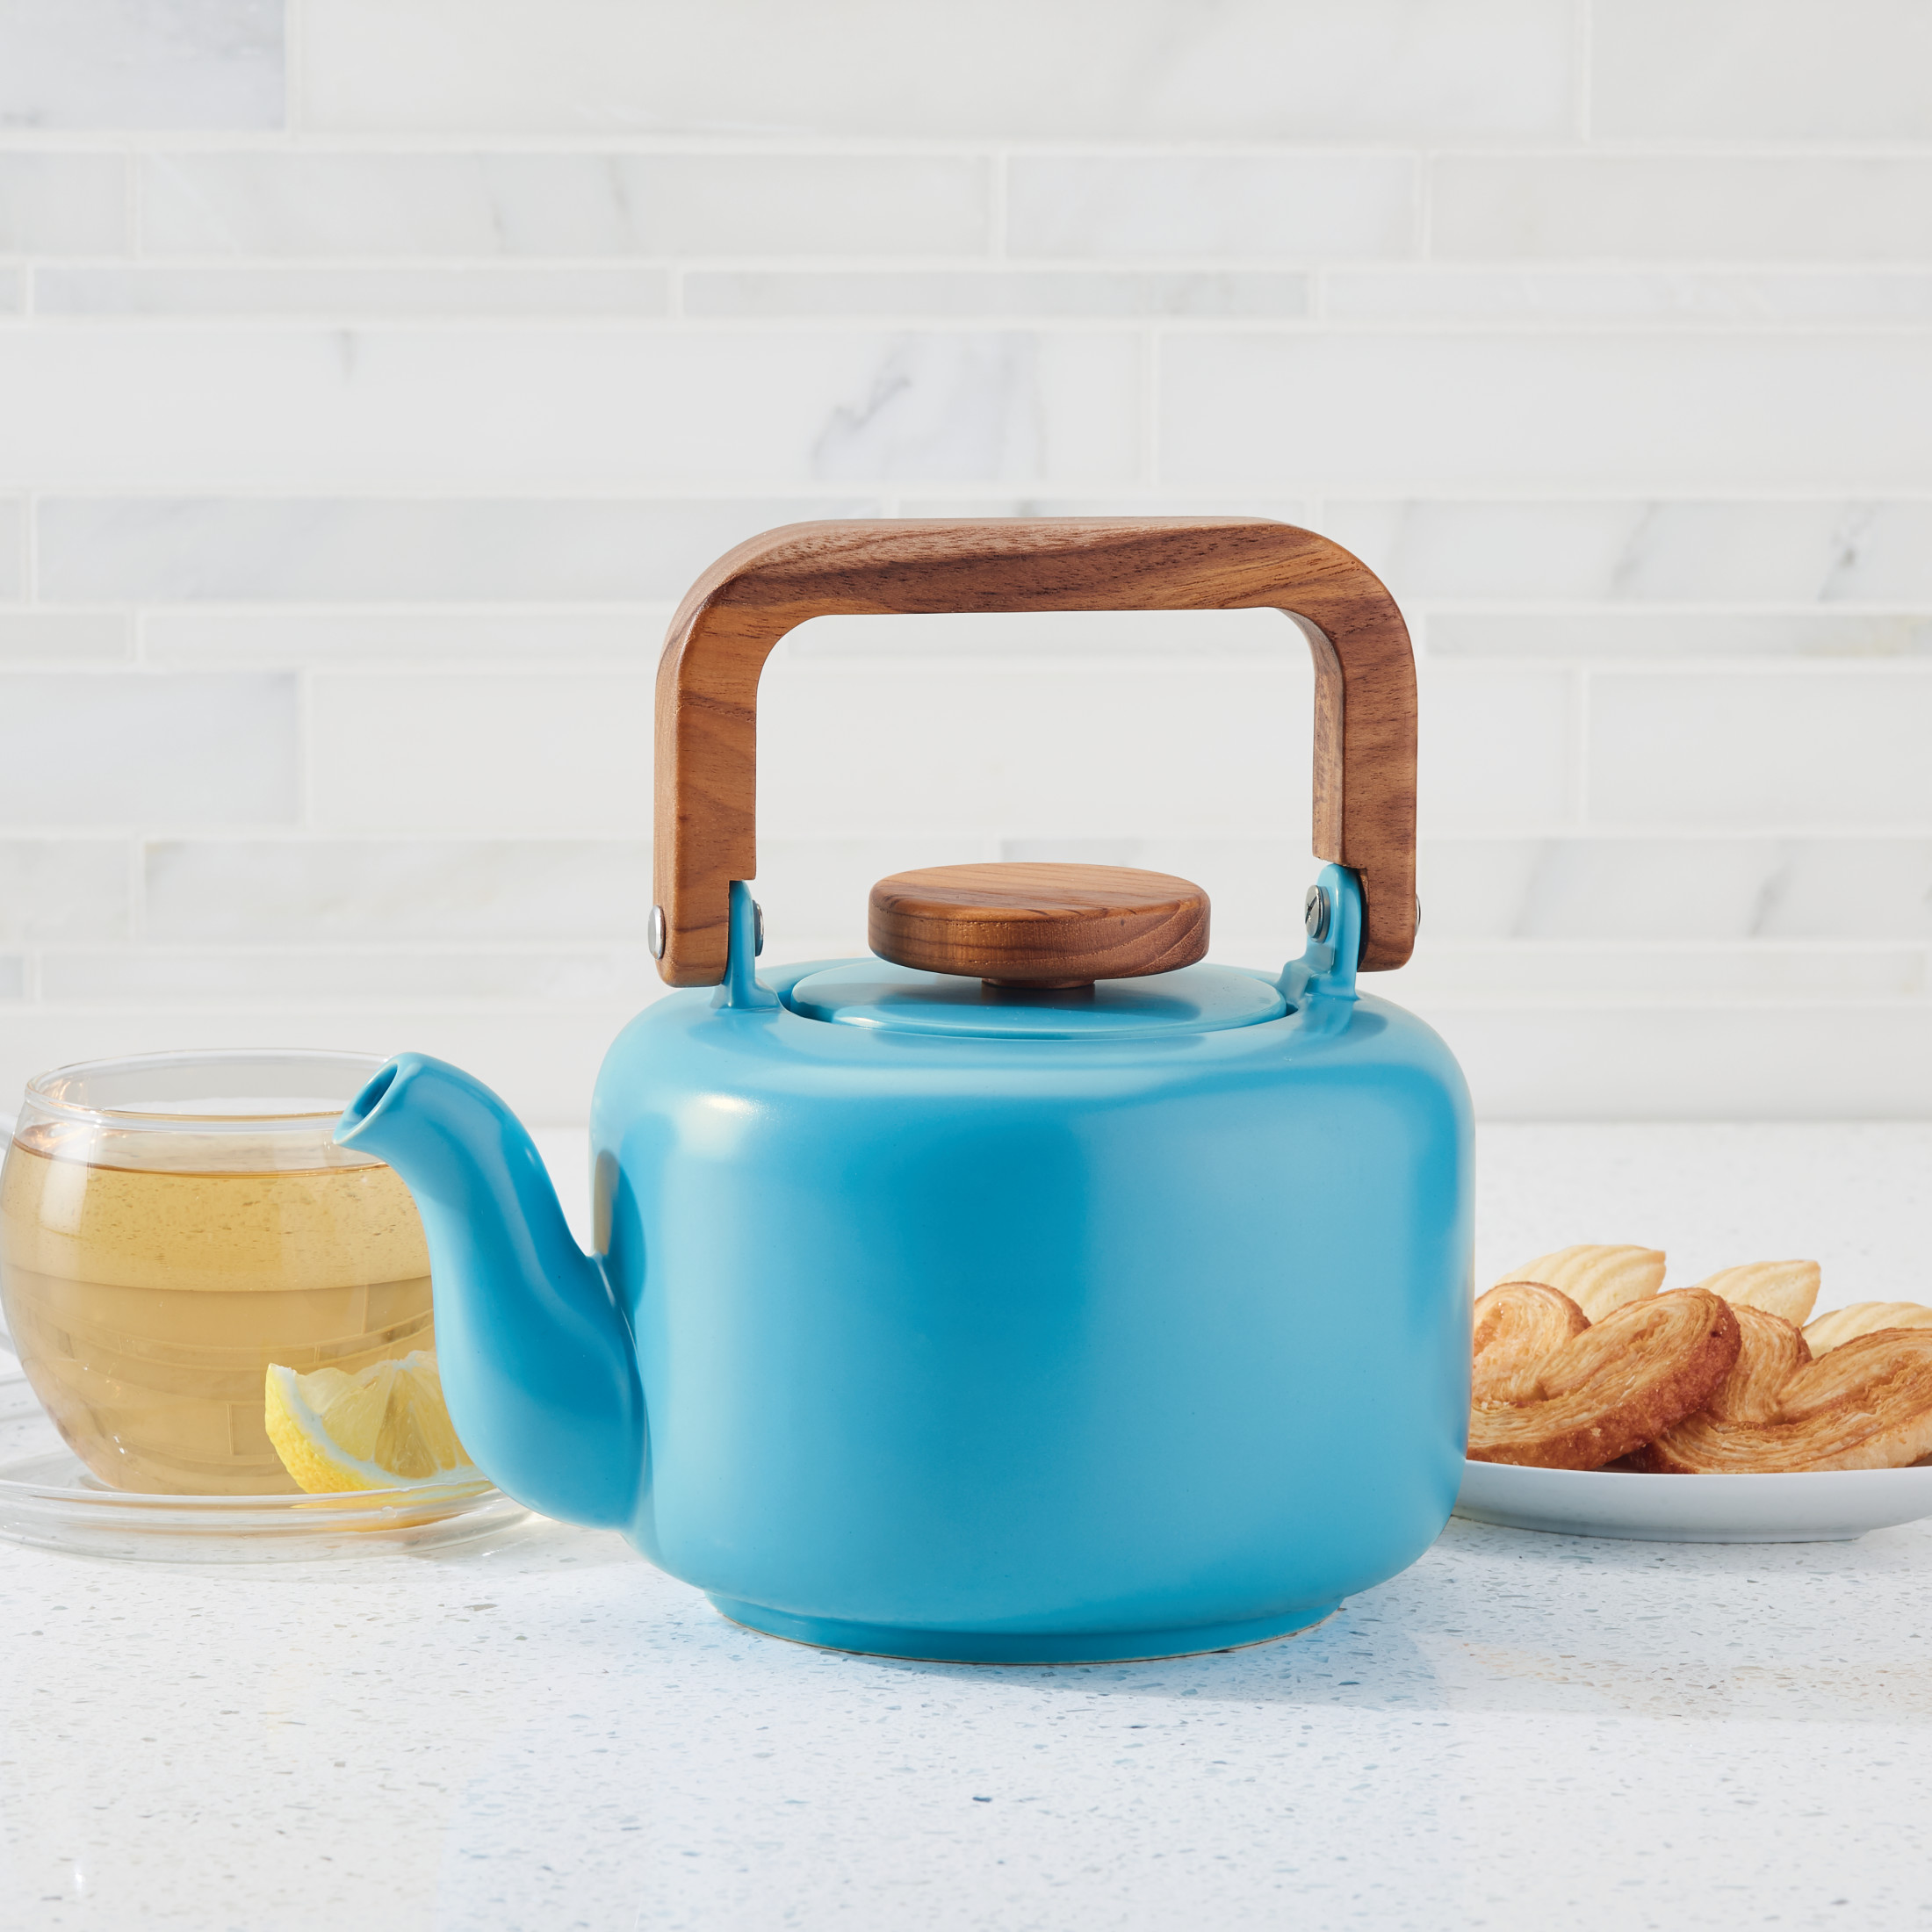 BonJour Ceramic Coffee and Tea 4-Cup Ceramic Teapot with Infuser, Aqua - image 2 of 7